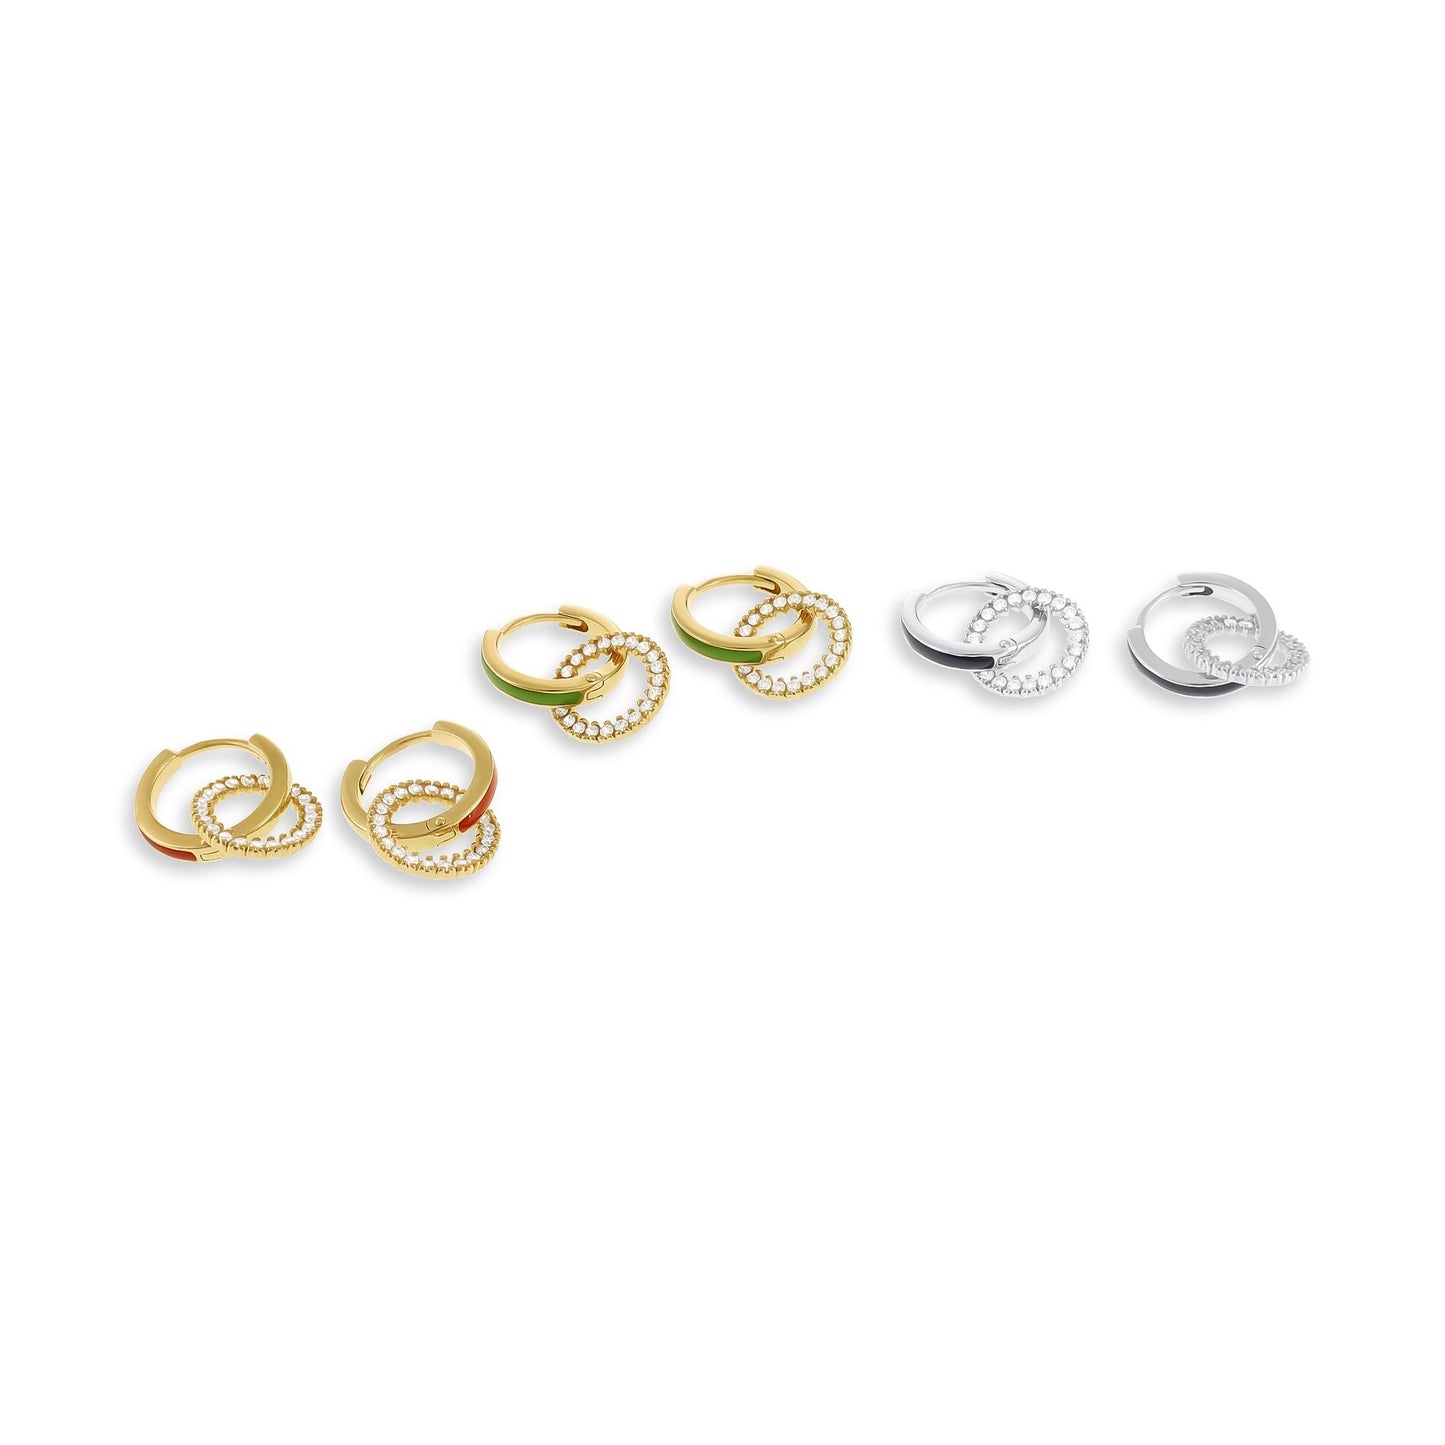 18ct 1 micron gold plated silver Green Enamel hoop Cubic zirconia earrings PER3003G - FJewellery